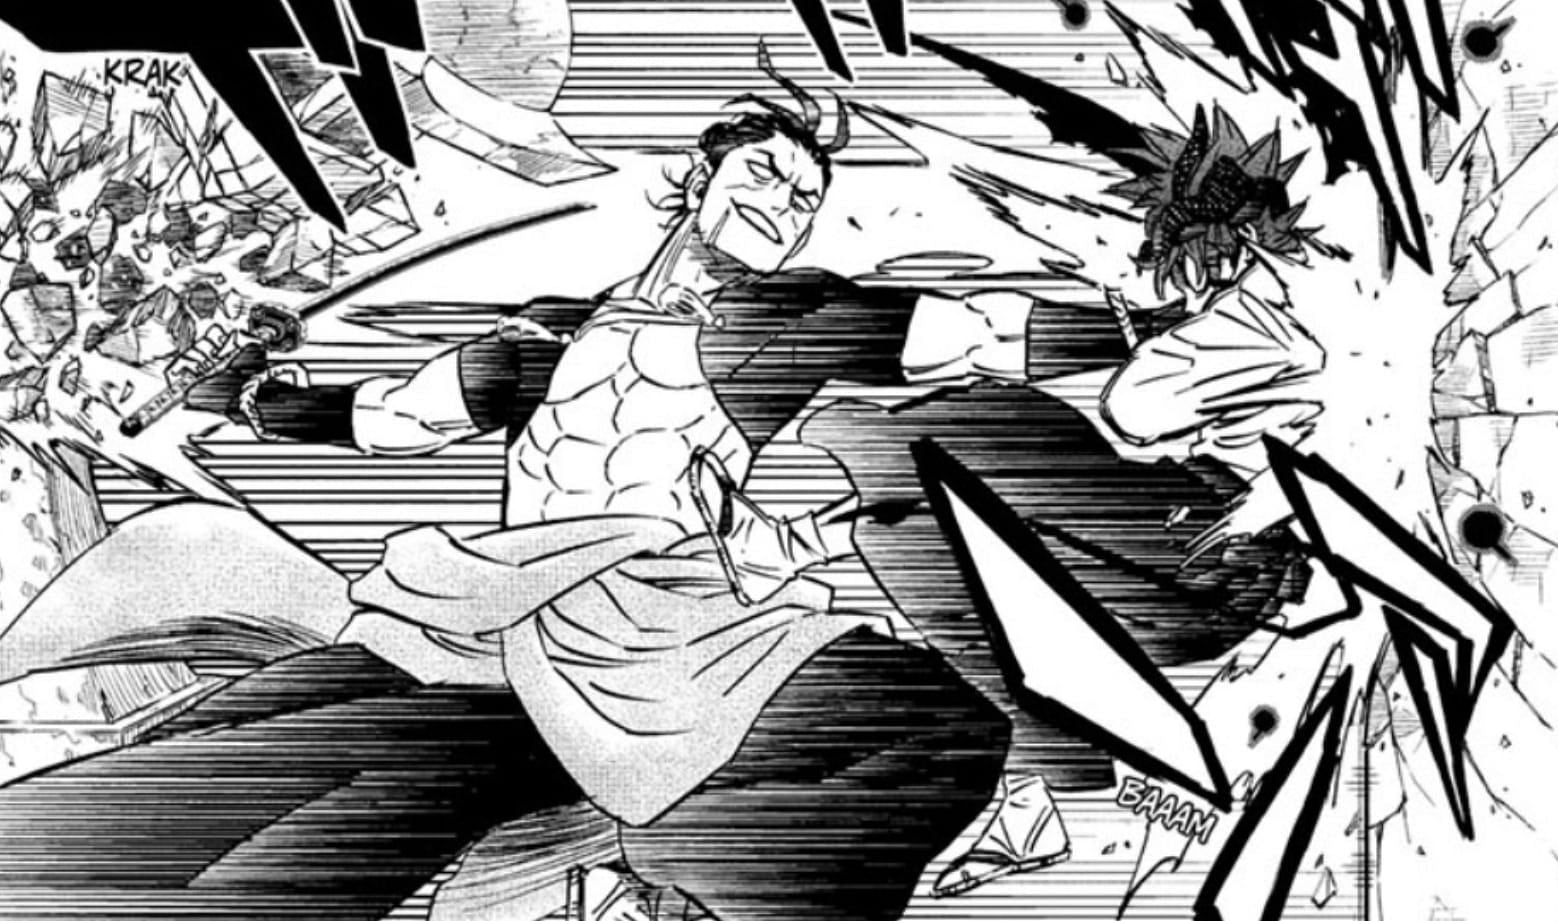 Yosuga Mushogatake training Asta in Zetten as seen in the manga (Image via Shueisha)